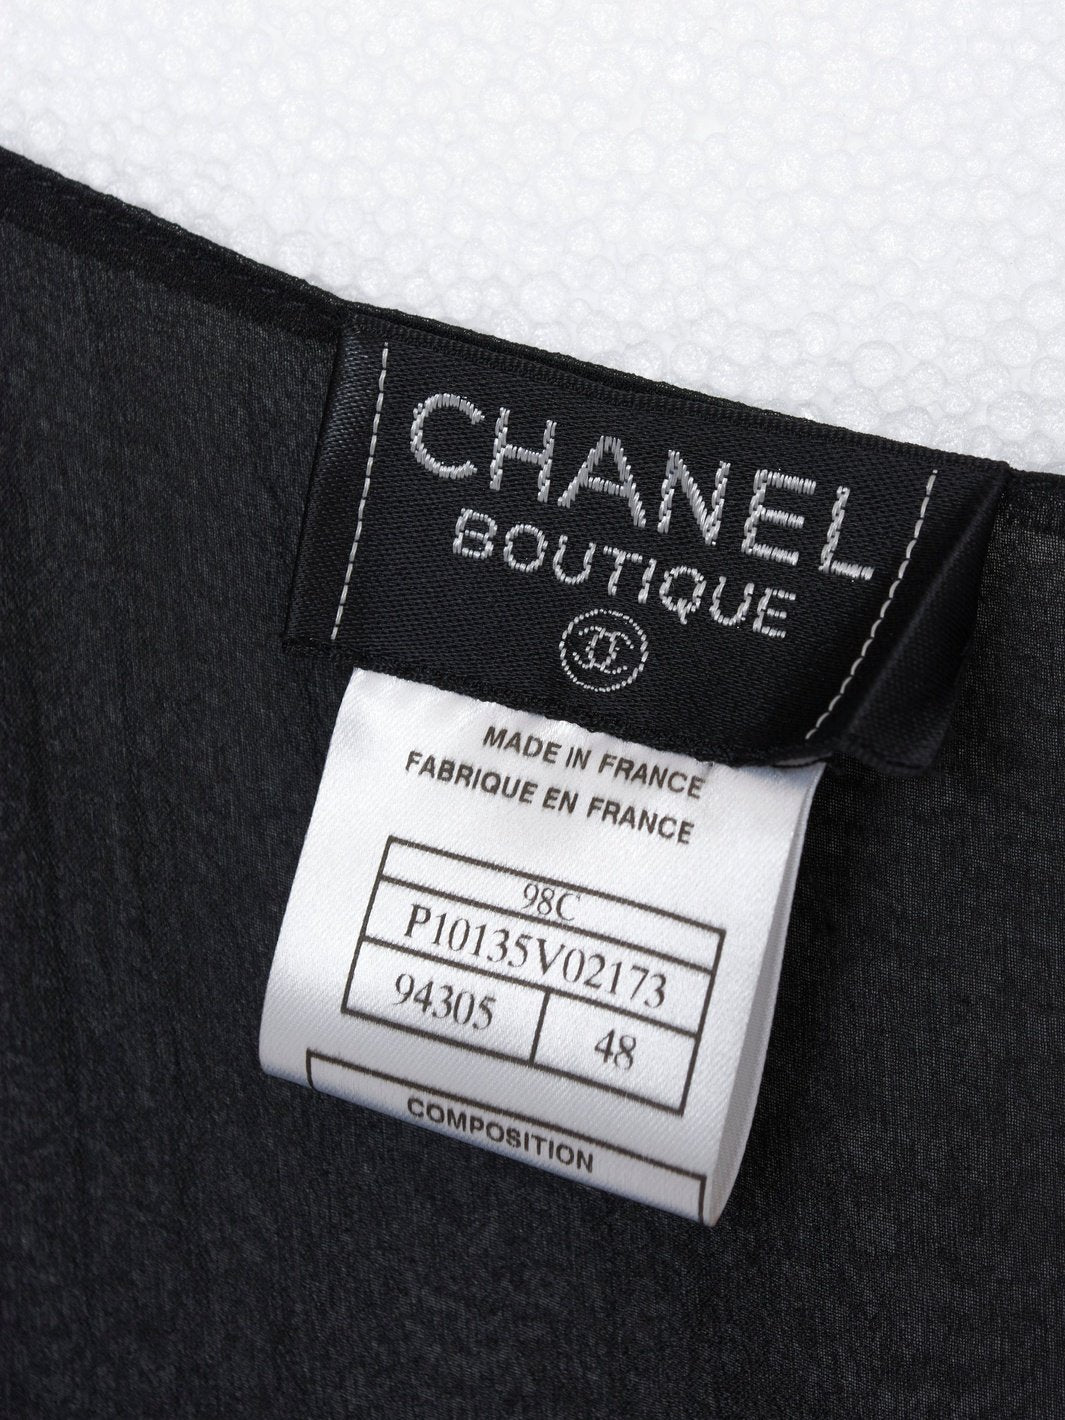 2010 Chanel top in black silk chiffon